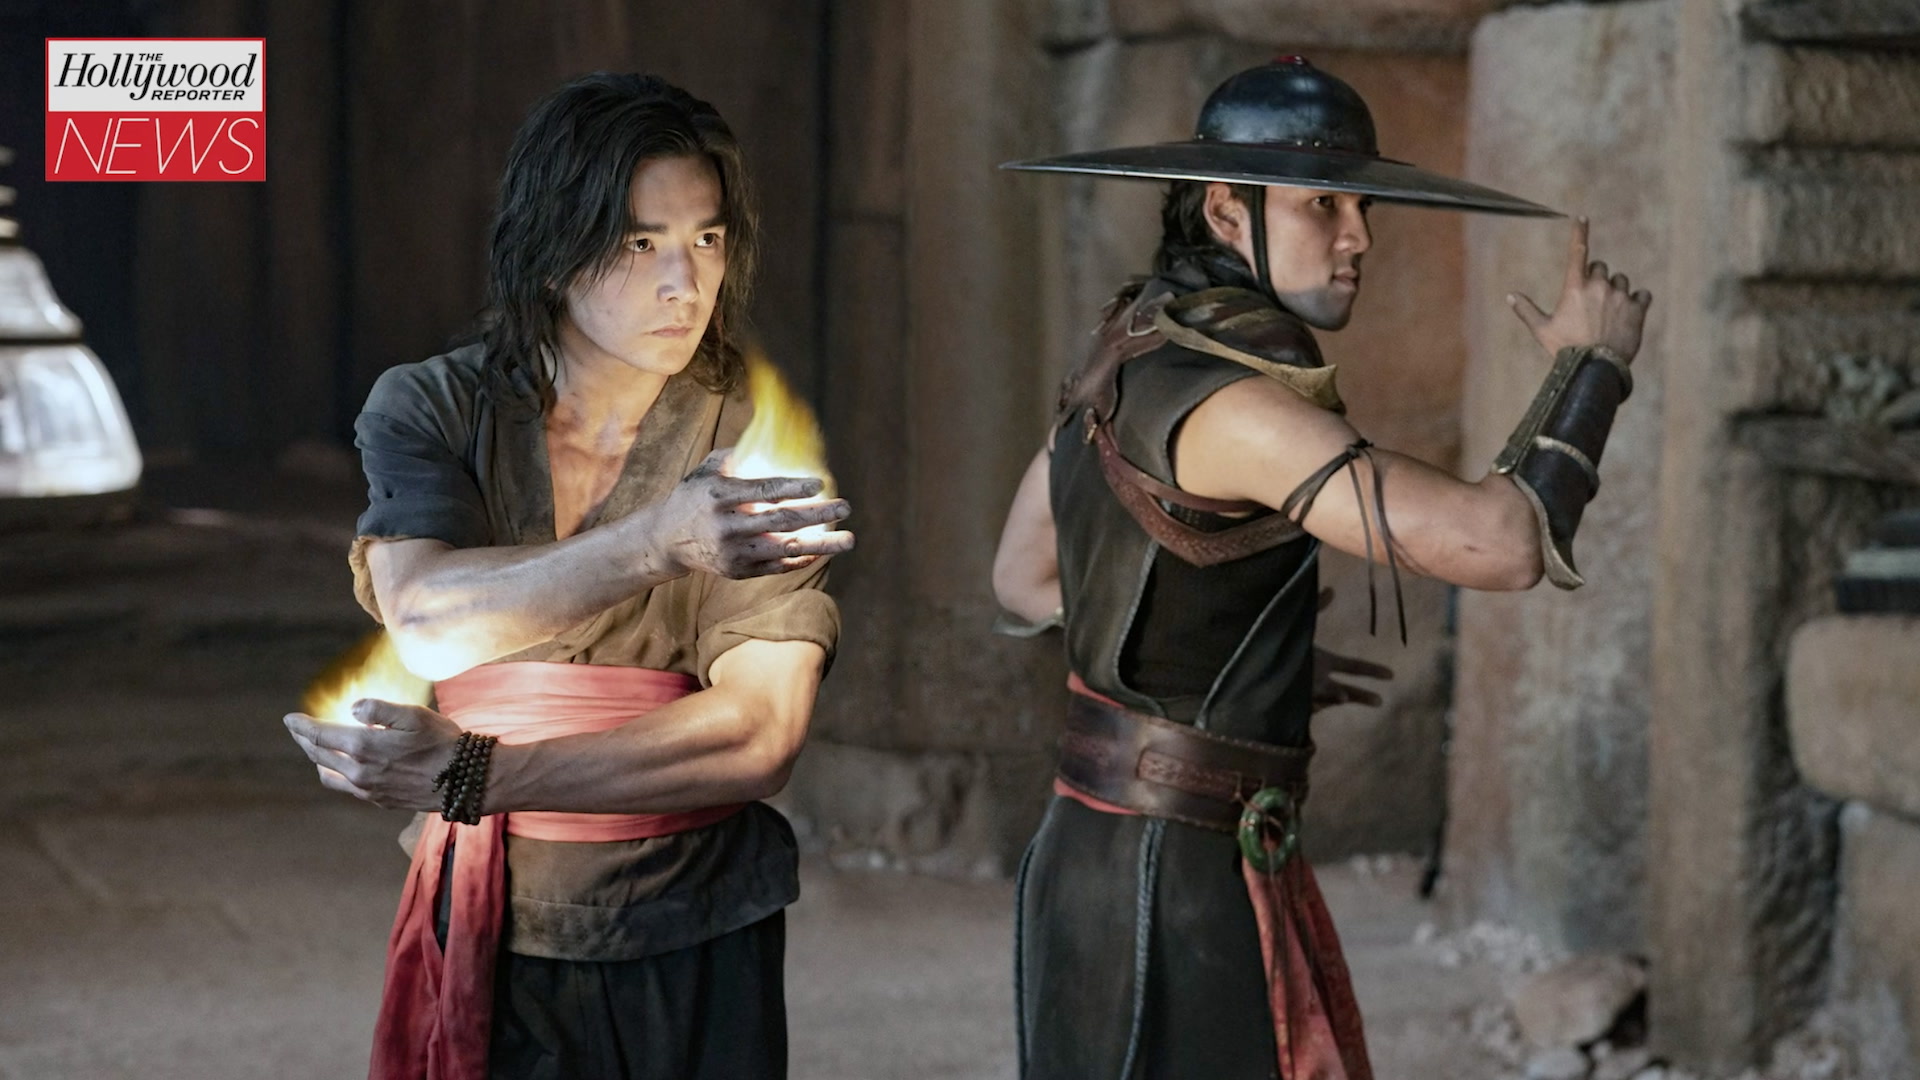 Mortal Kombat': Sonya Blade Actress Jessica McNamee on Sequel Possibilities  – The Hollywood Reporter